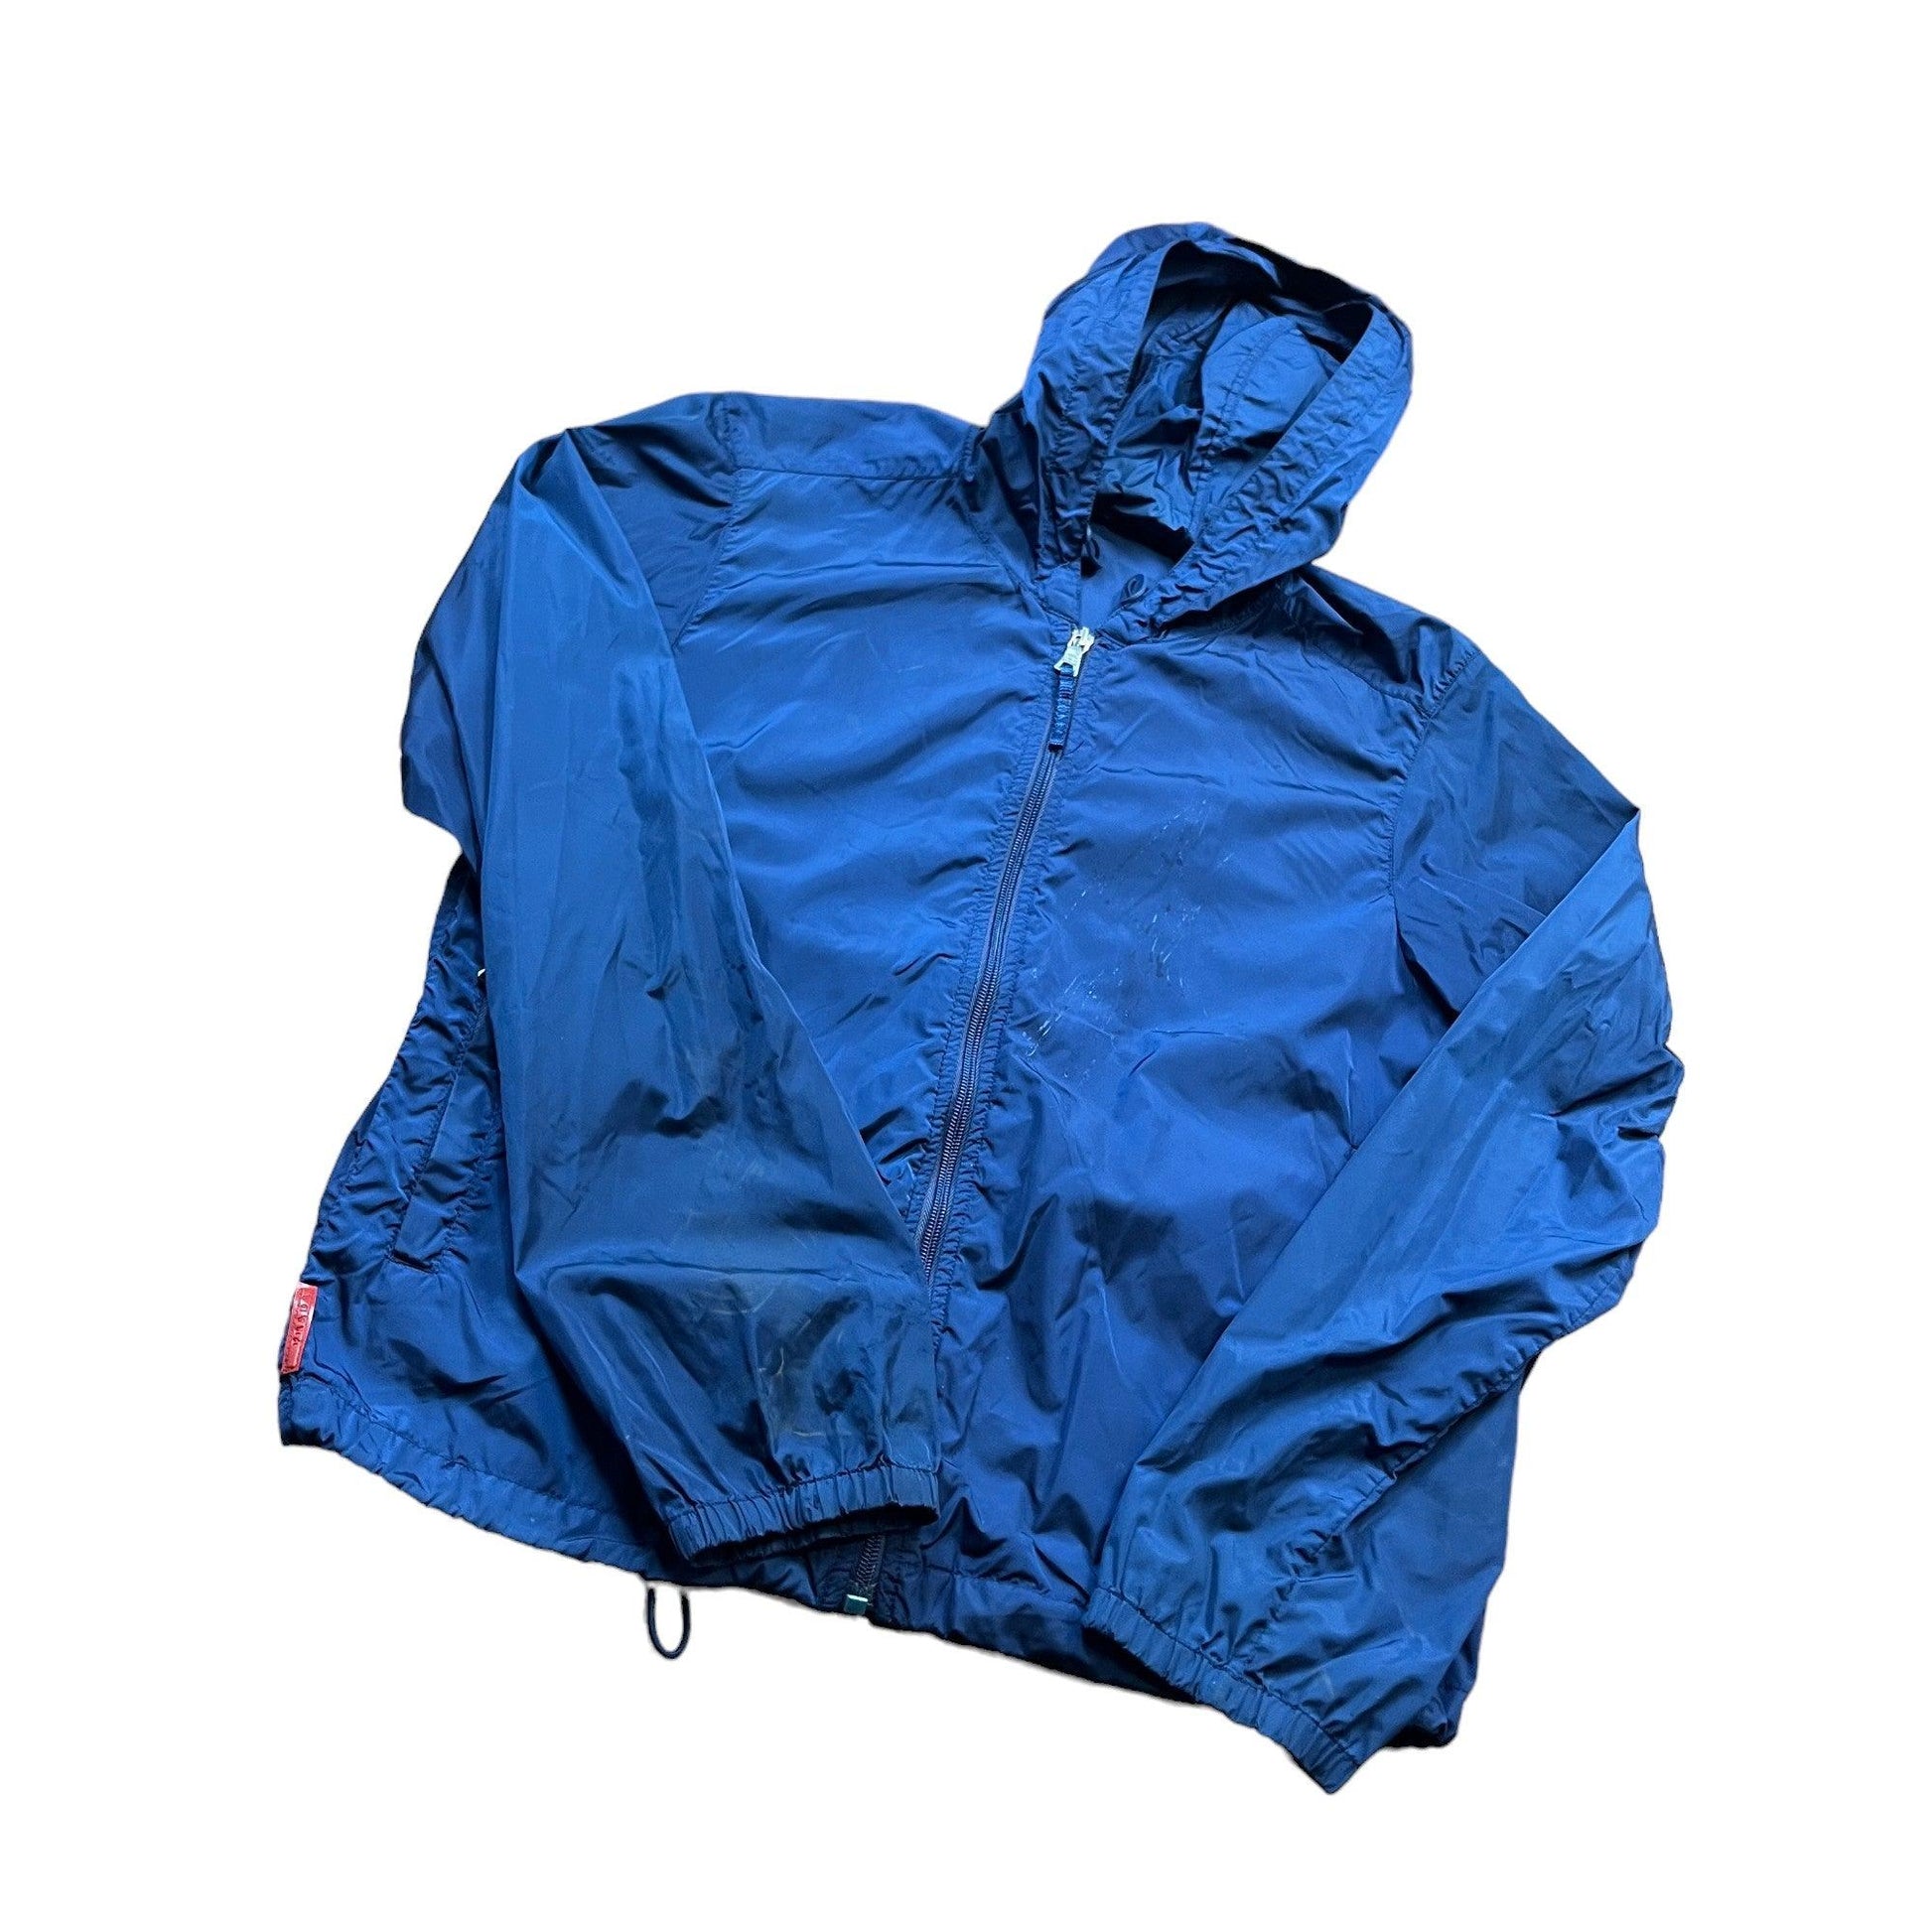 Vintage Blue Prada Windbreaker Jacket - Small - The Streetwear Studio